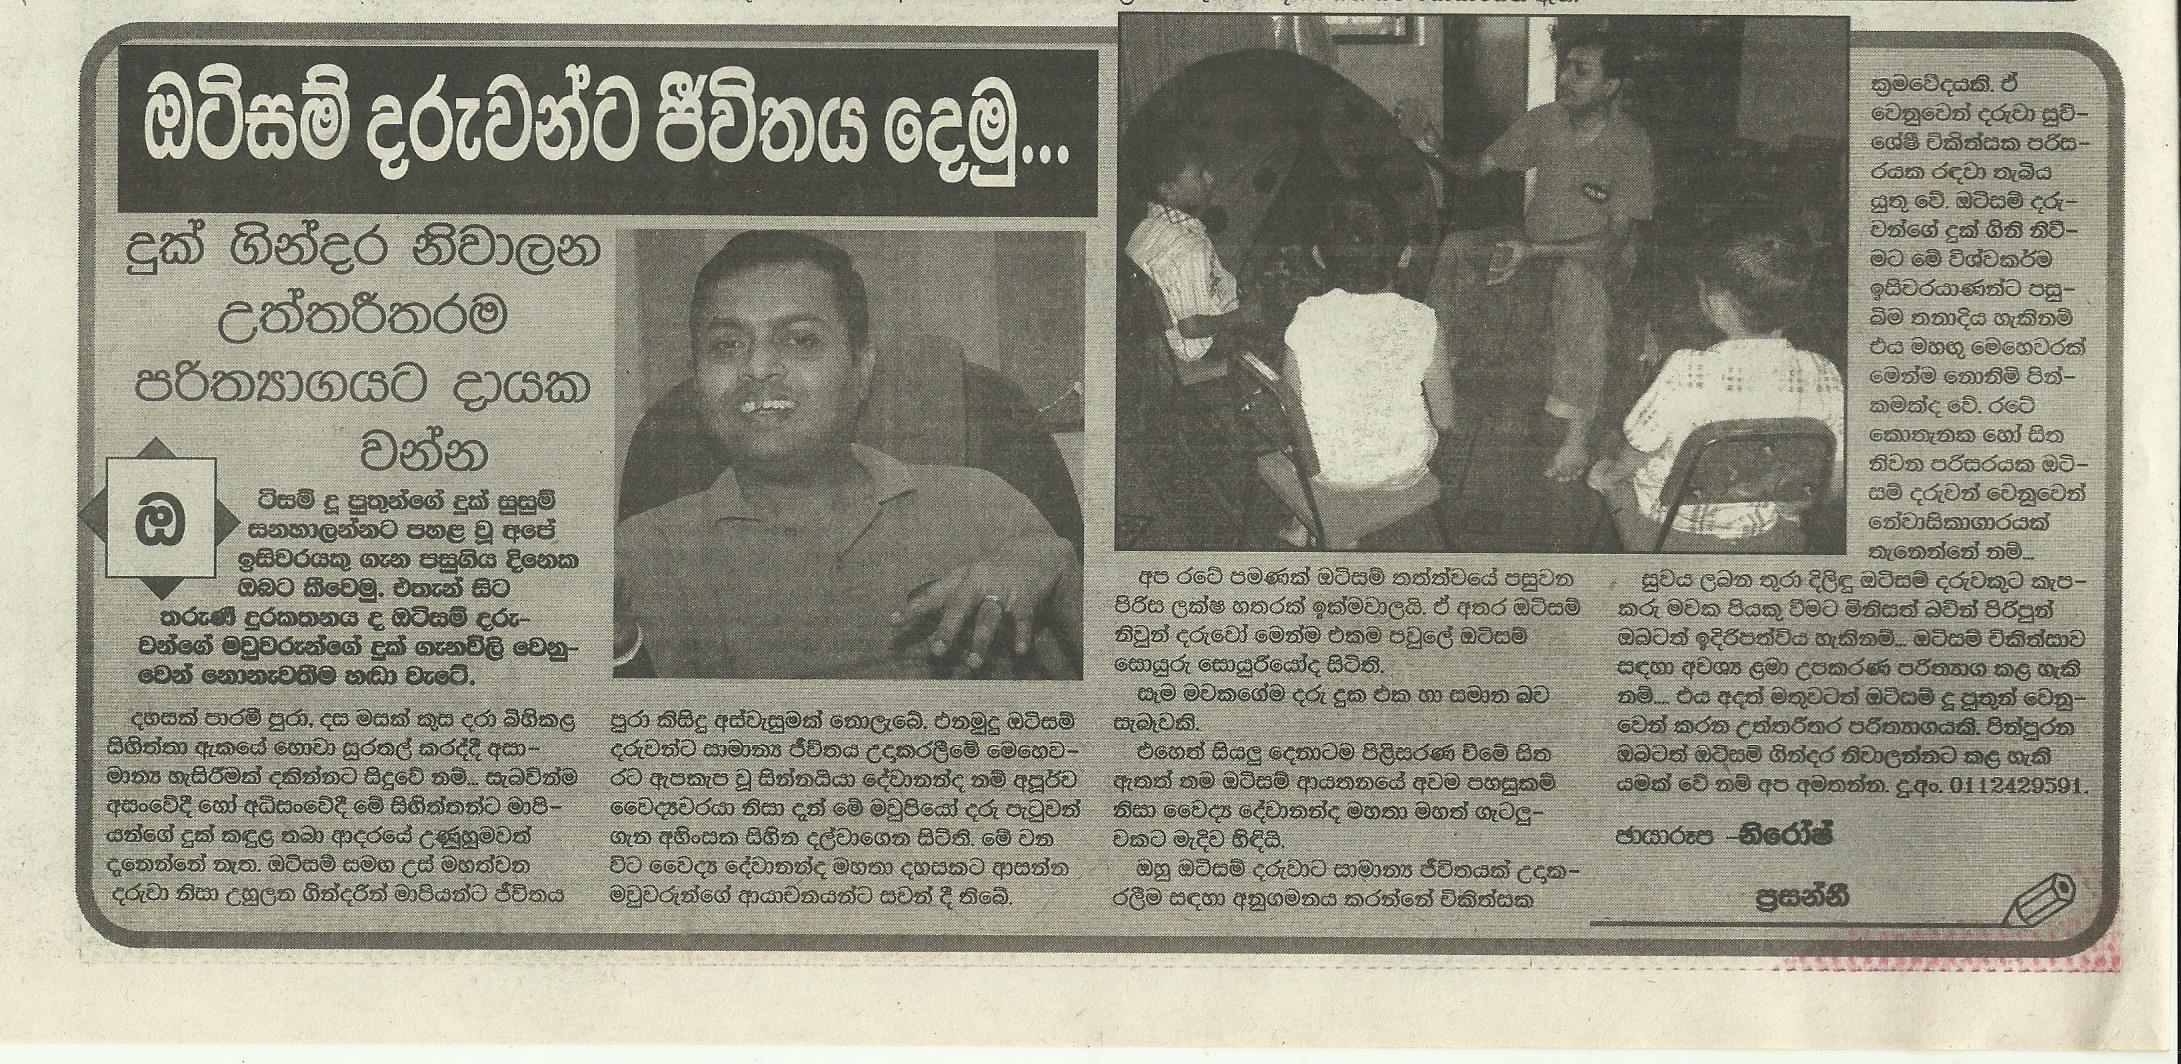 Tharuni Newspaper (22-02-2012)  page No 24